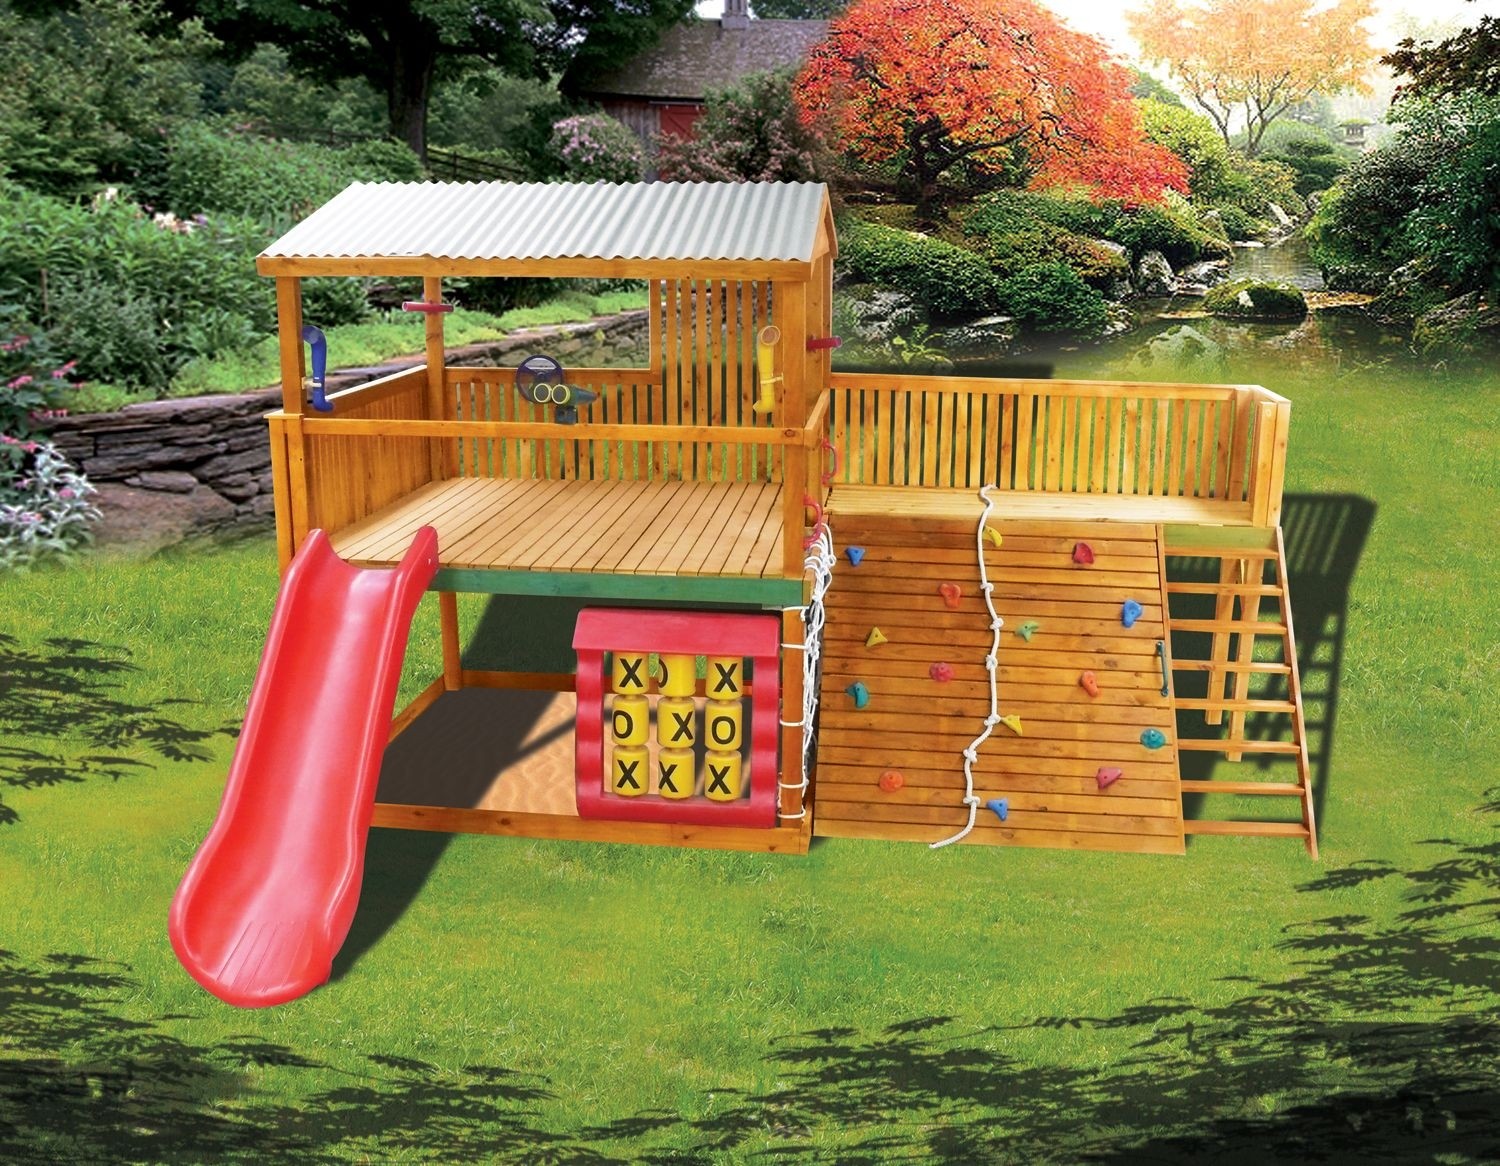 Backyard wooden playground equipment like our safari pak cubby fort